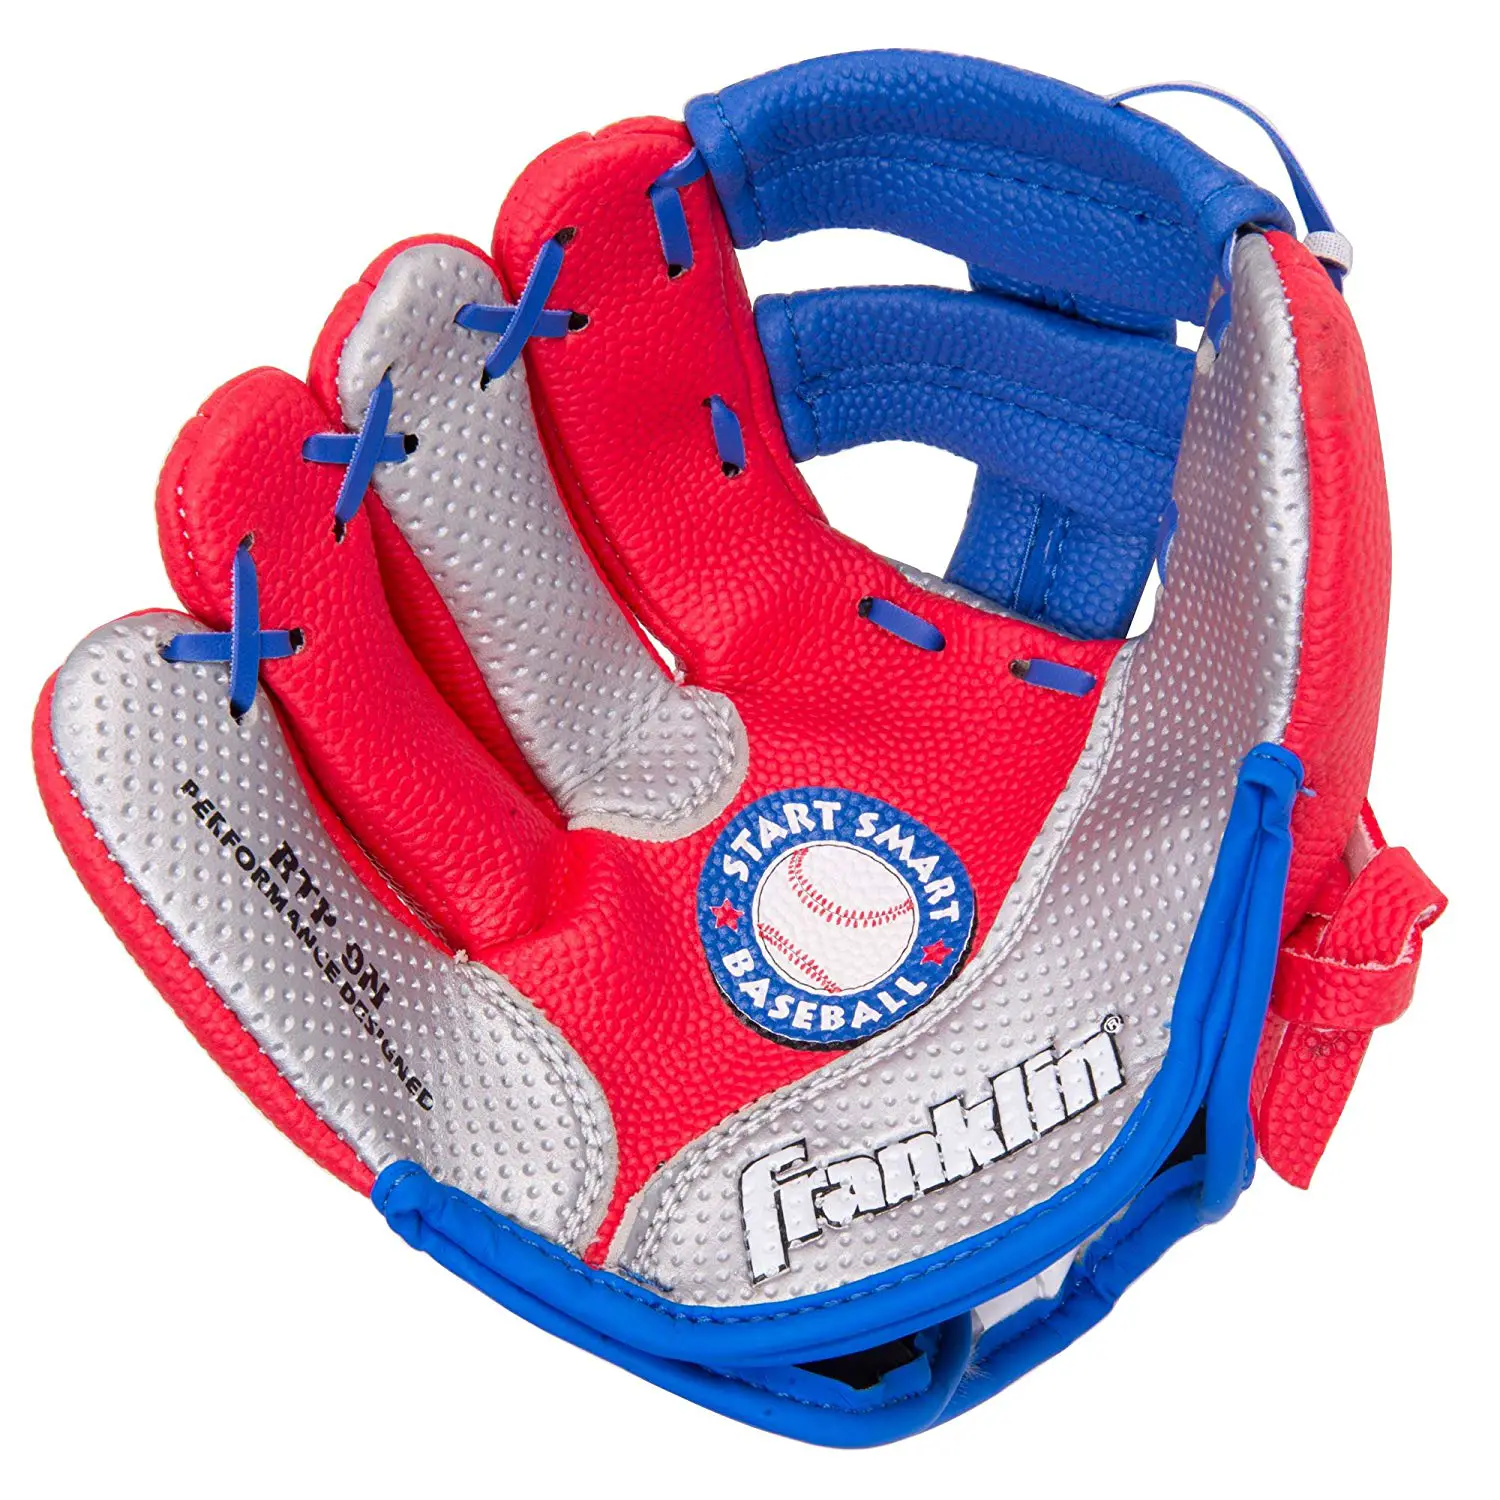 Franklin Youth Baseball Glove 9-Inch